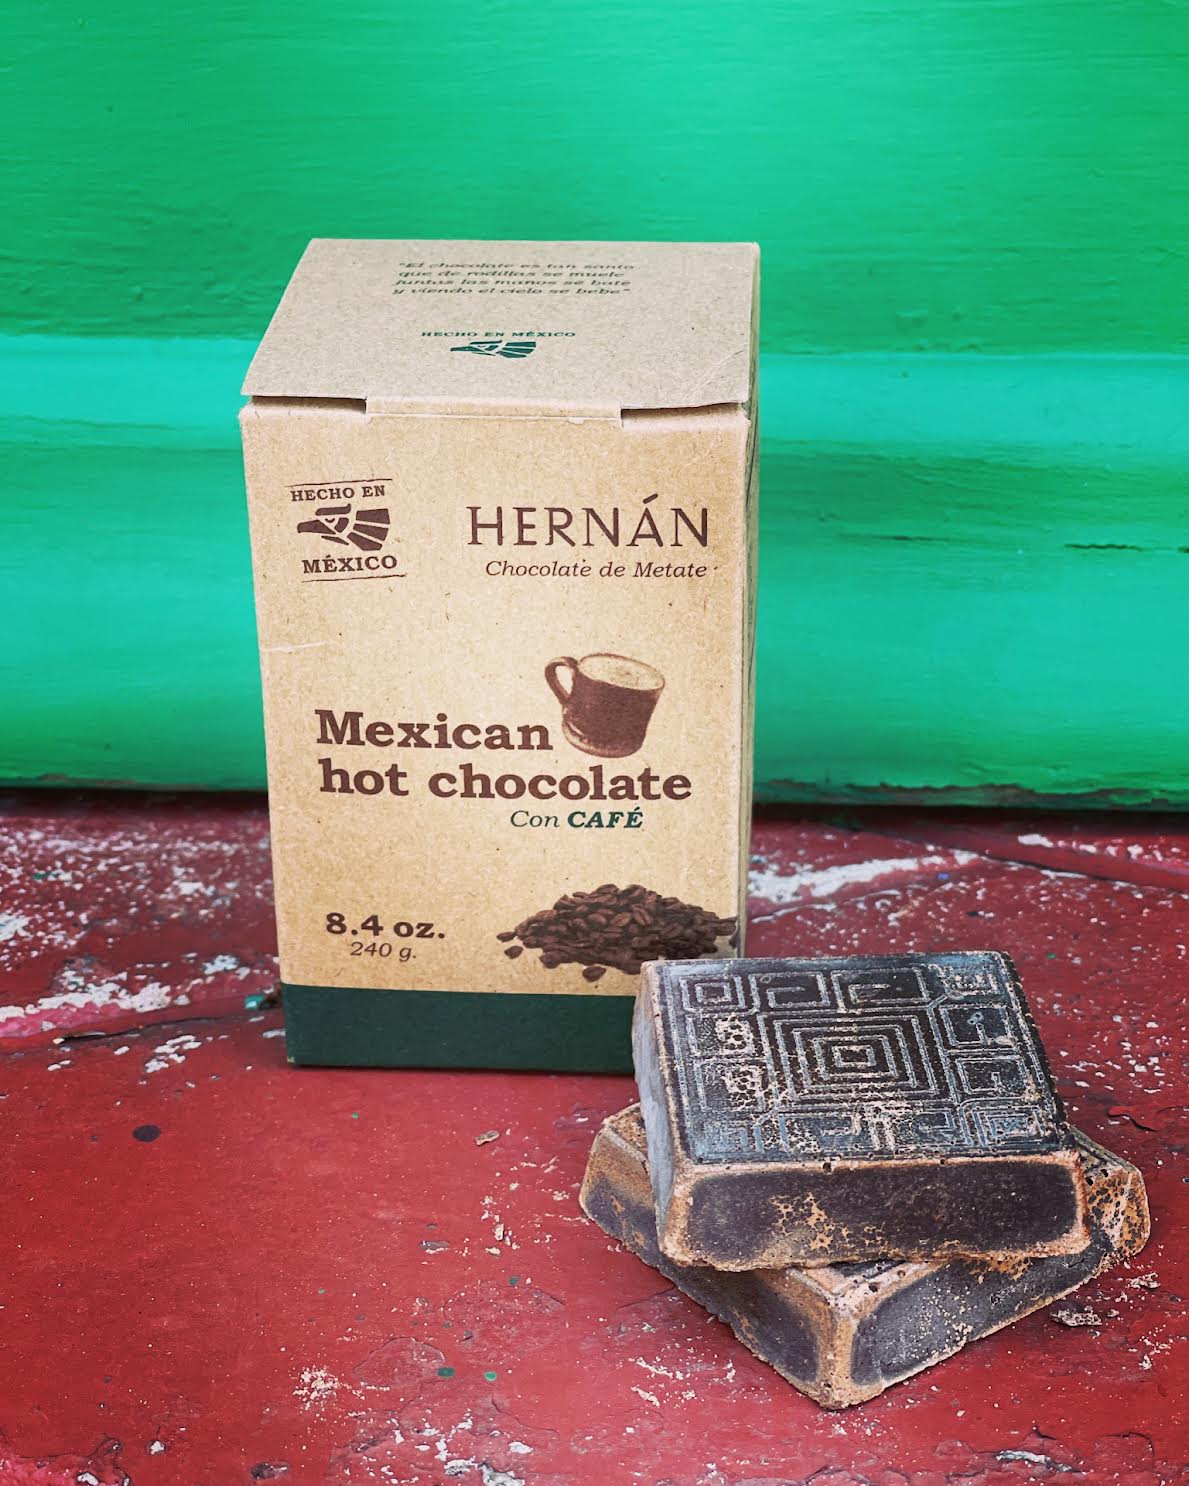 Chiapas Mexican Hot Chocolate "con cafe" Tablillas